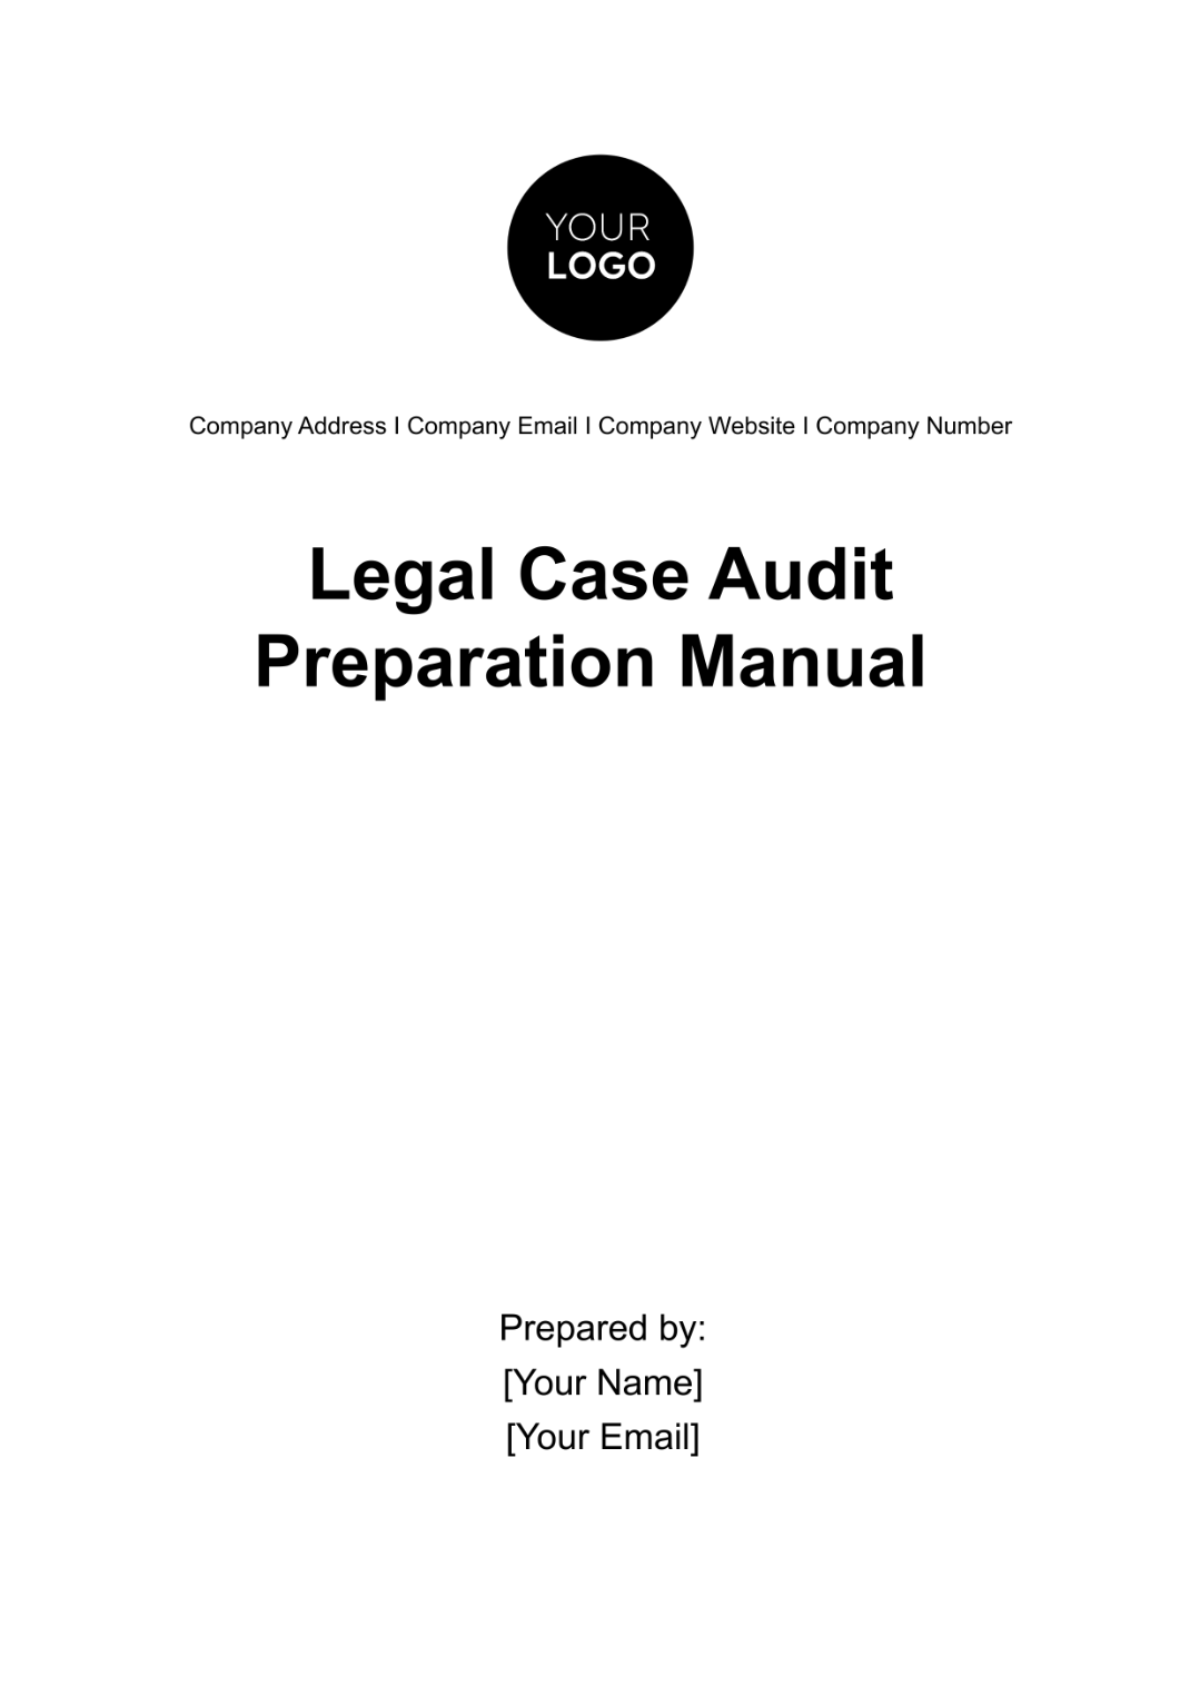 Legal Case Audit Preparation Manual Template